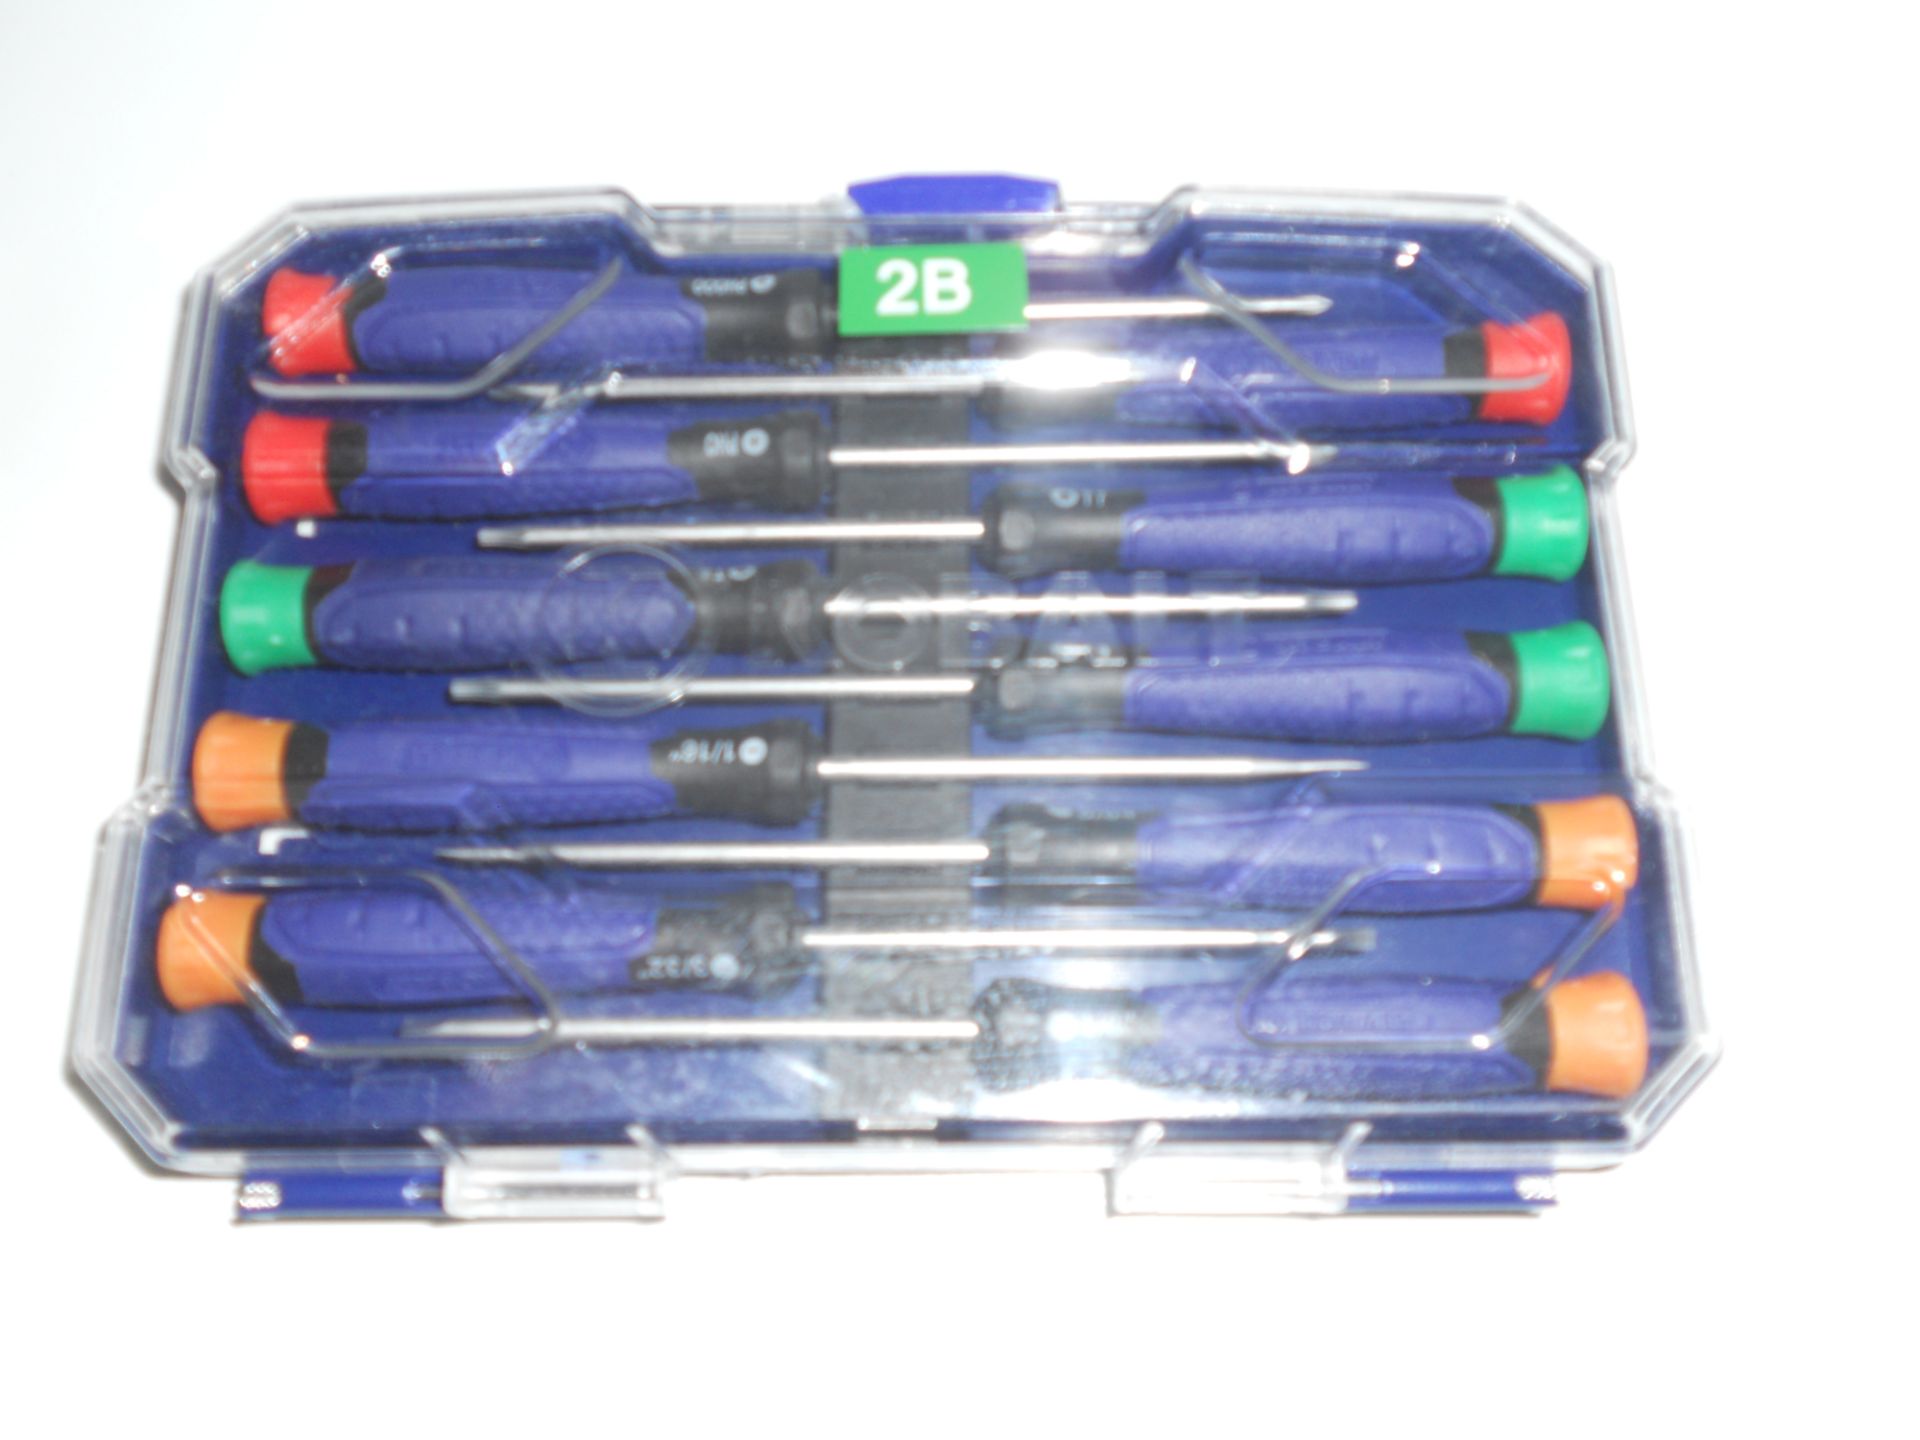 Kobalt 10-piece Precision screwdriver set - Image 2 of 2